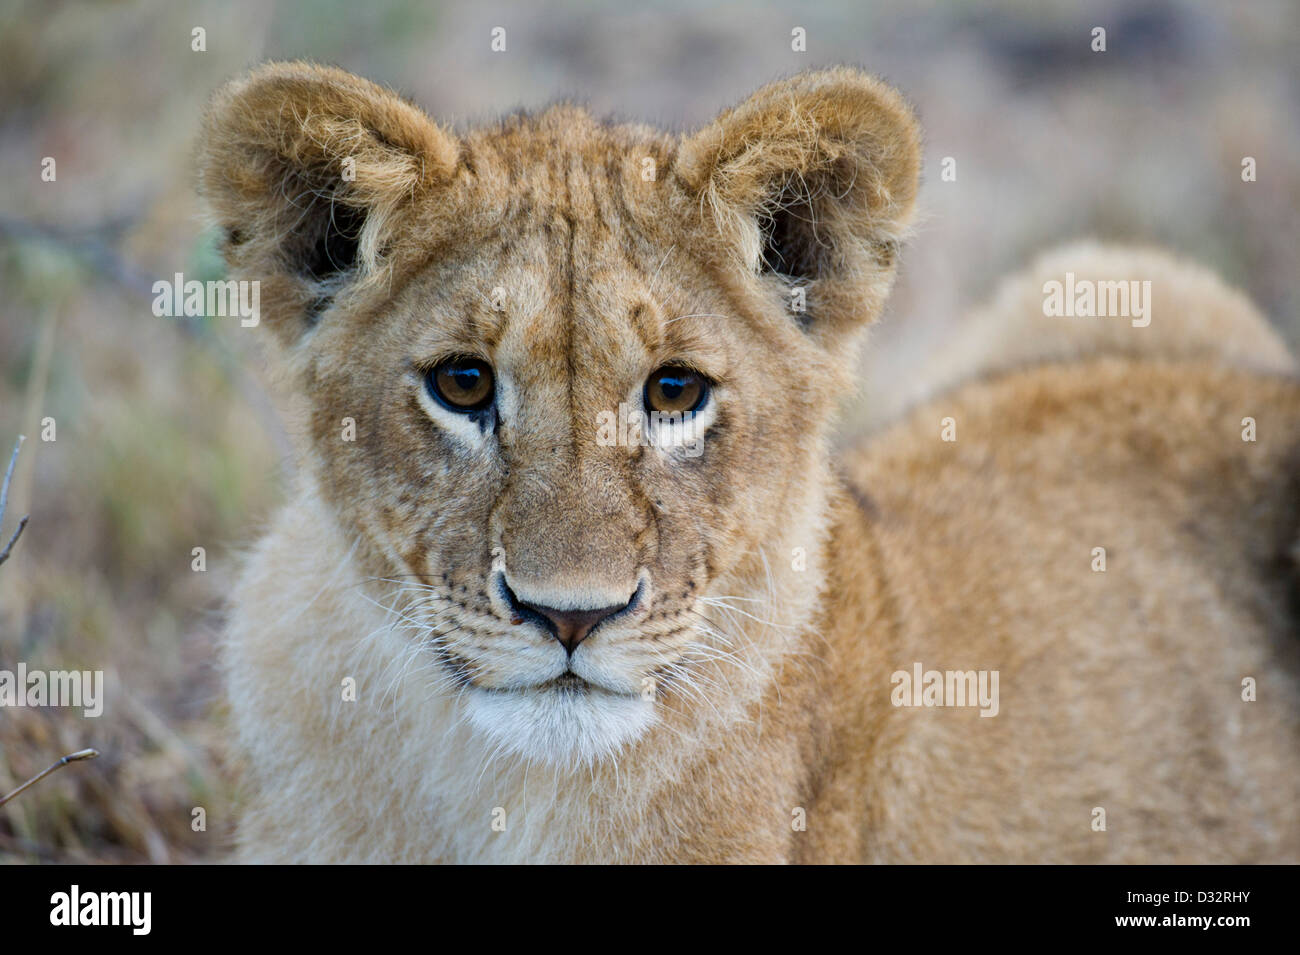 Lion cub (Panthero leo), Maasai Mara National Reserve, Kenya Banque D'Images